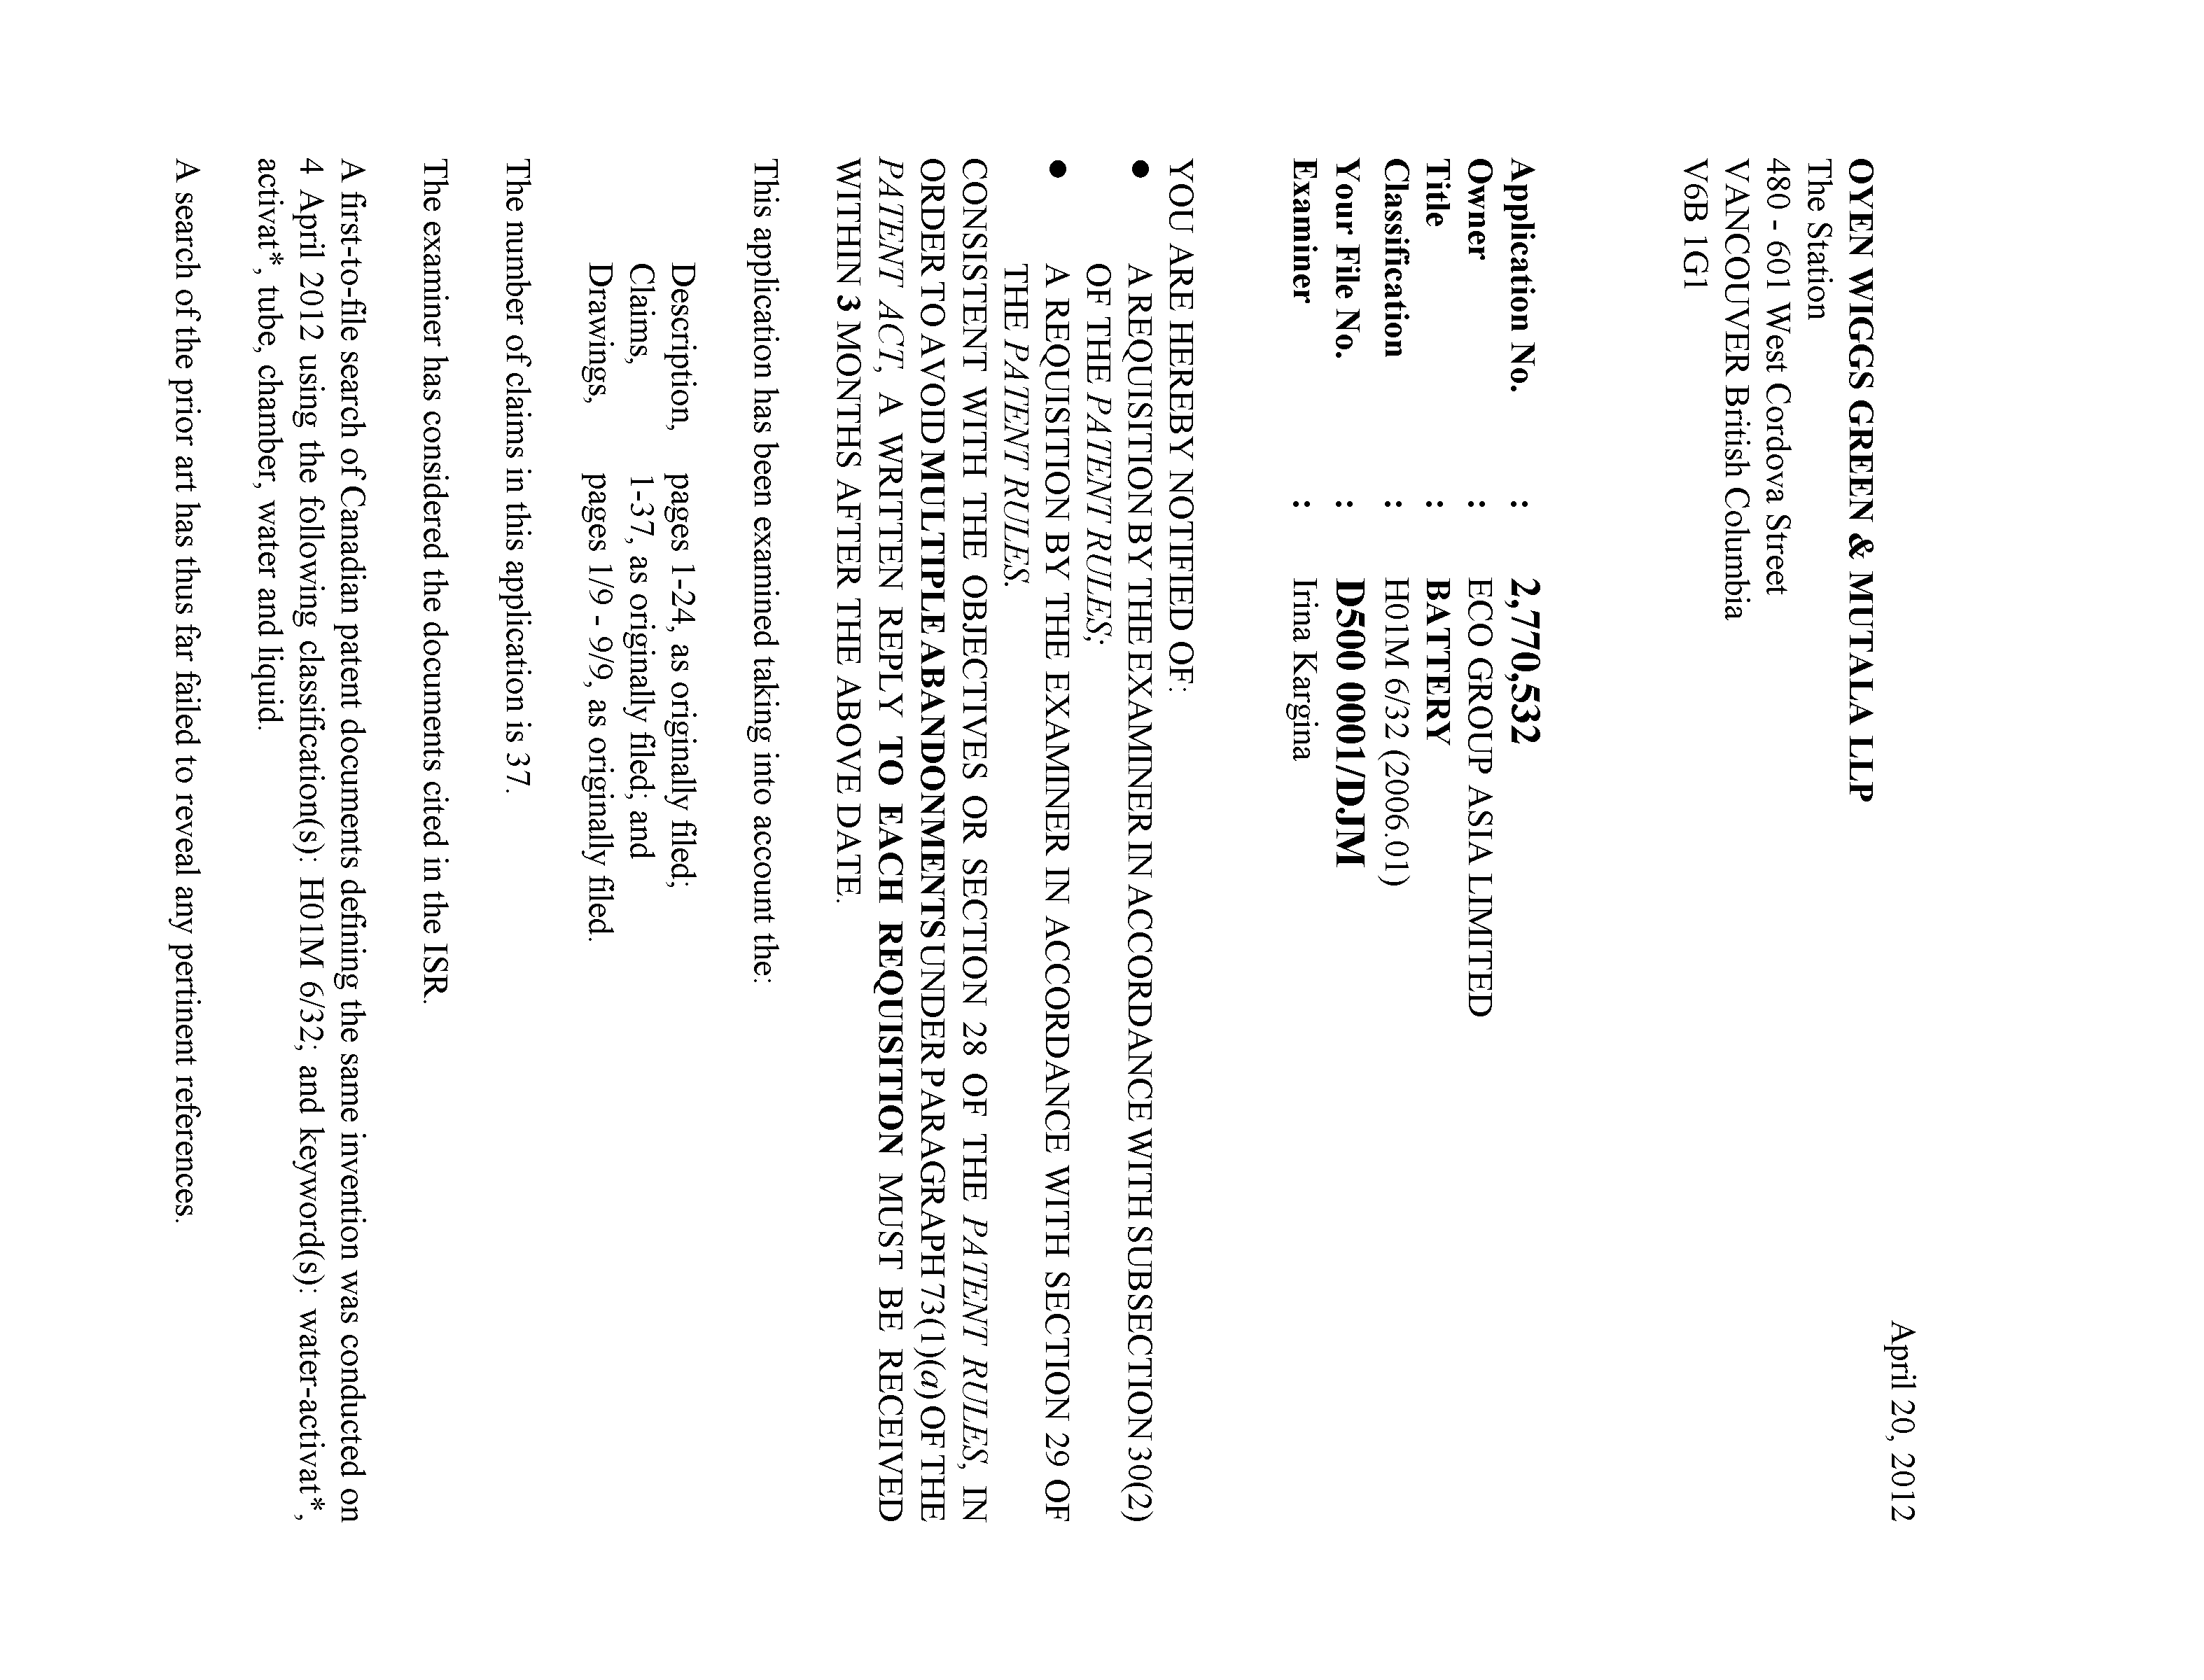 Canadian Patent Document 2770532. Prosecution-Amendment 20111220. Image 1 of 6